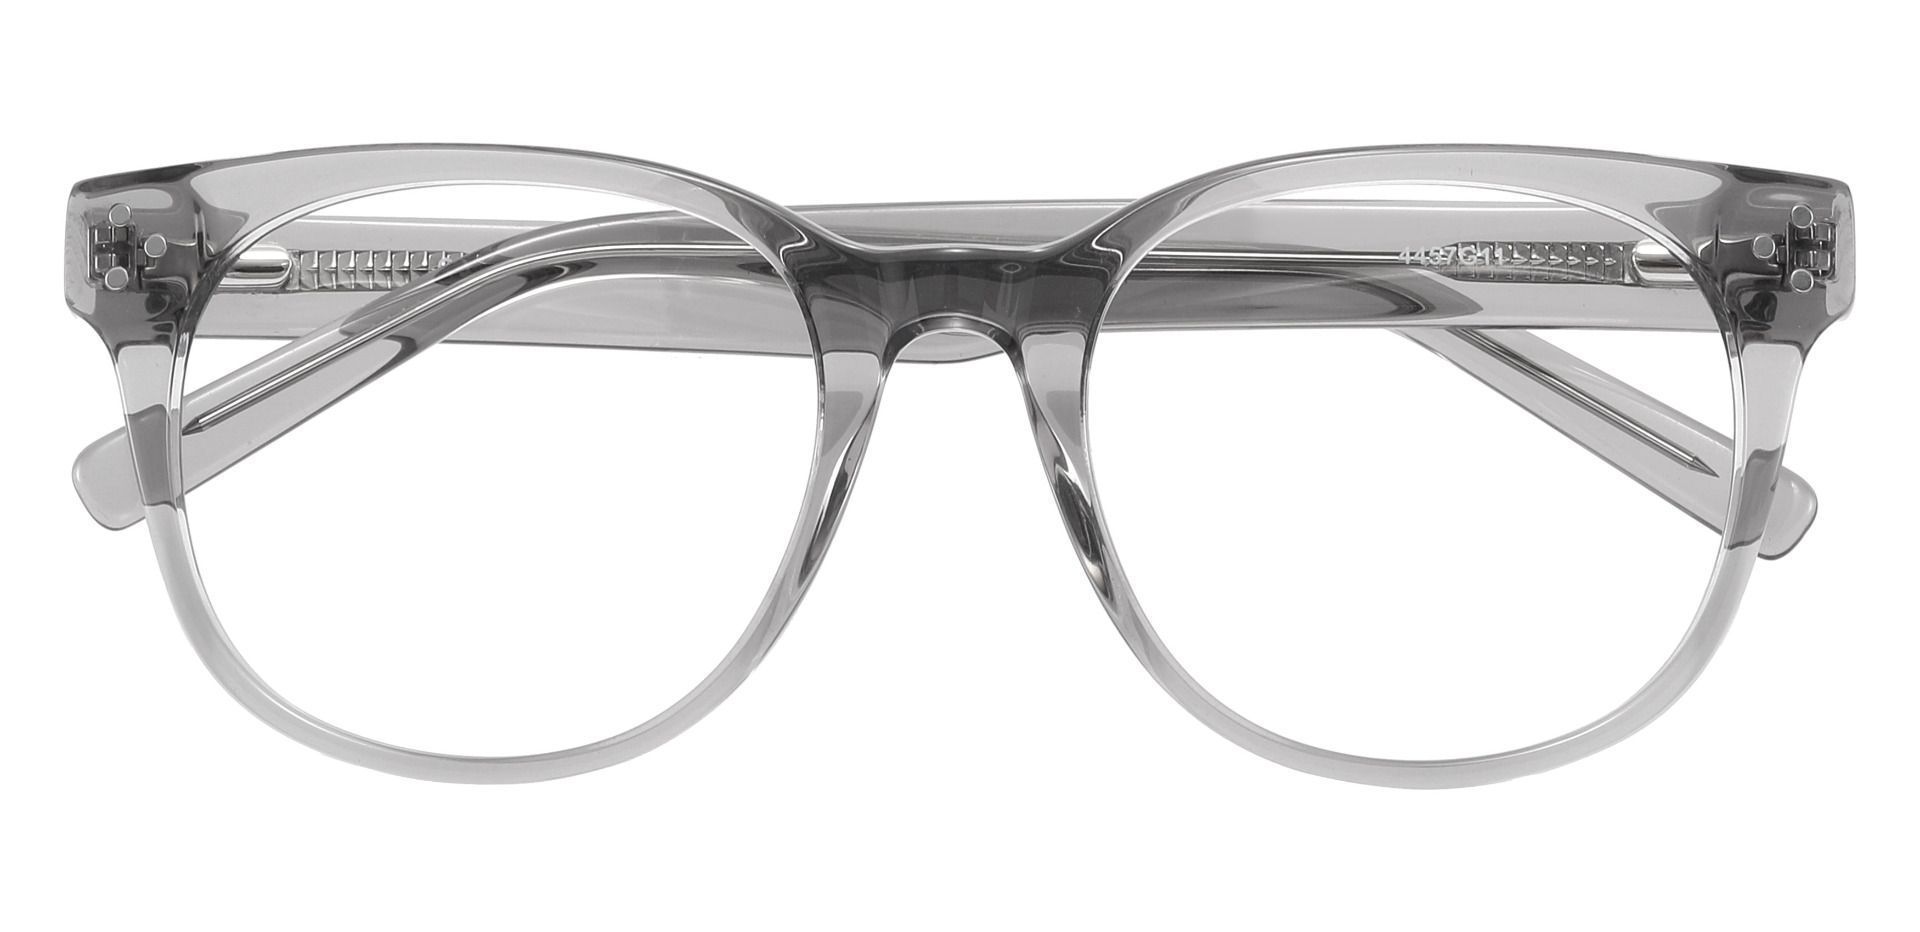 Orwell Oval Progressive Glasses - Gray